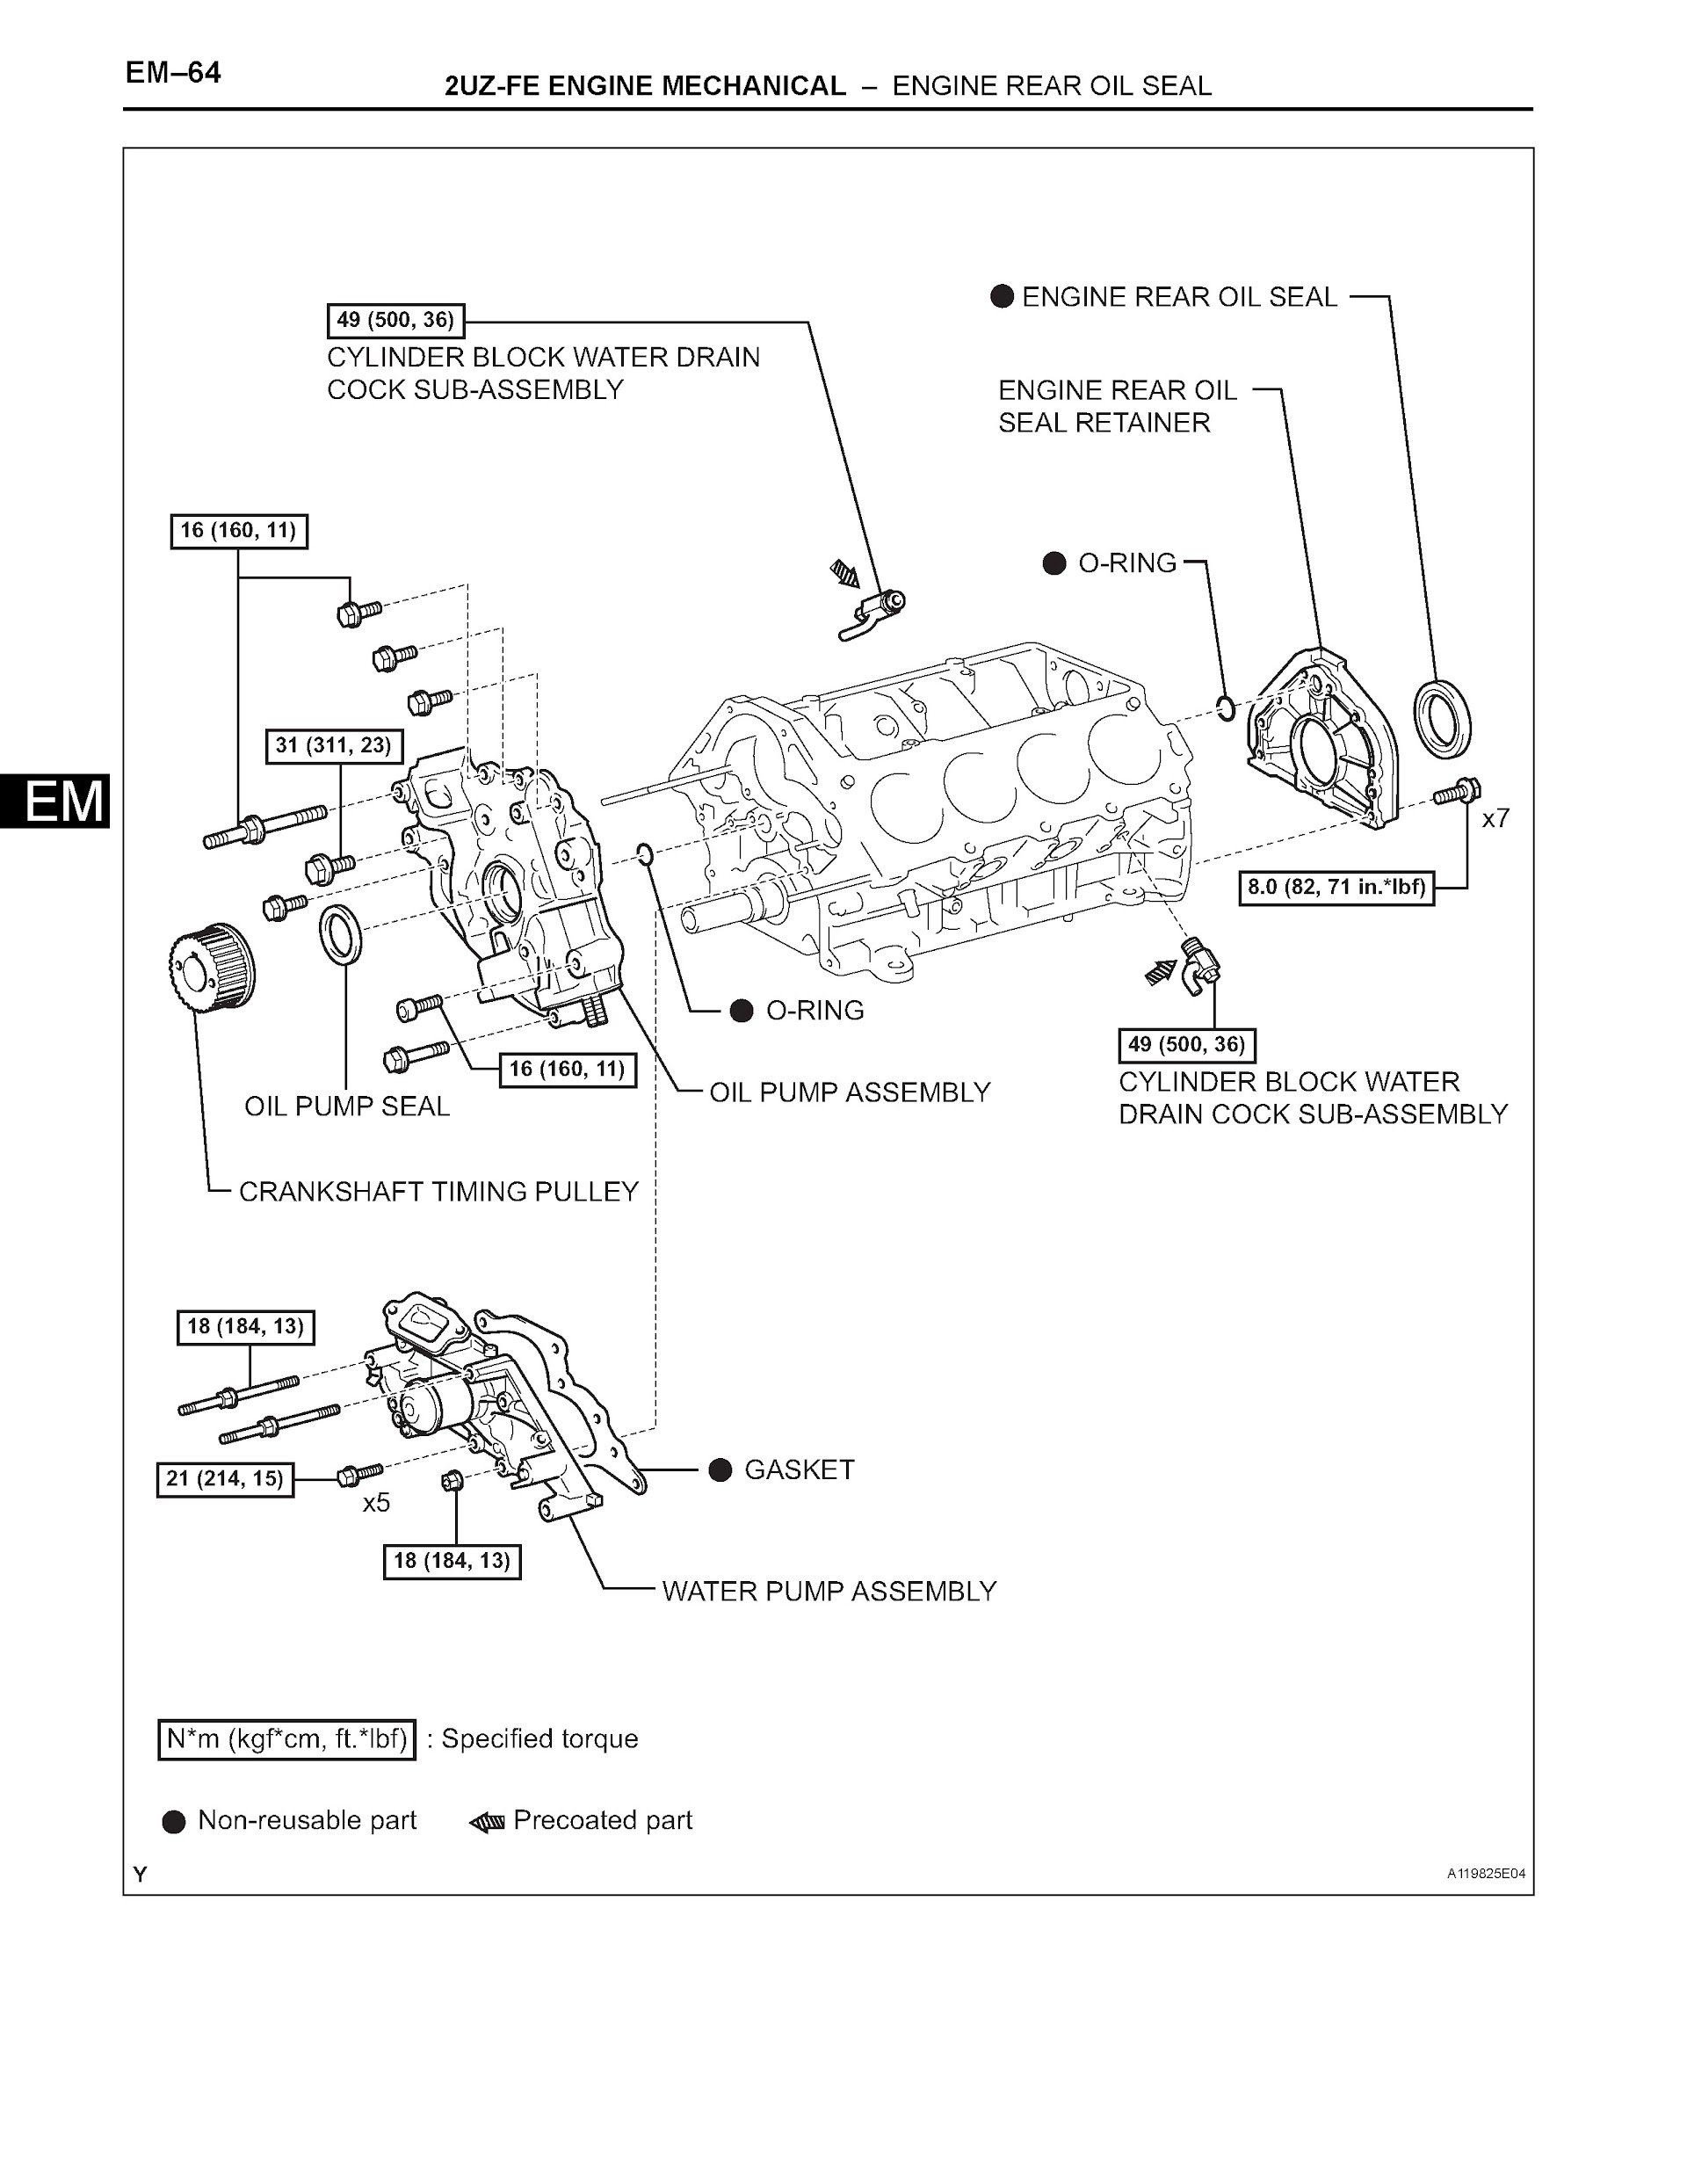 2007 Toyota 4Runner Repair Manual, 2UZ-FE, Engine Mechanical, Engine Rear Oil Seal